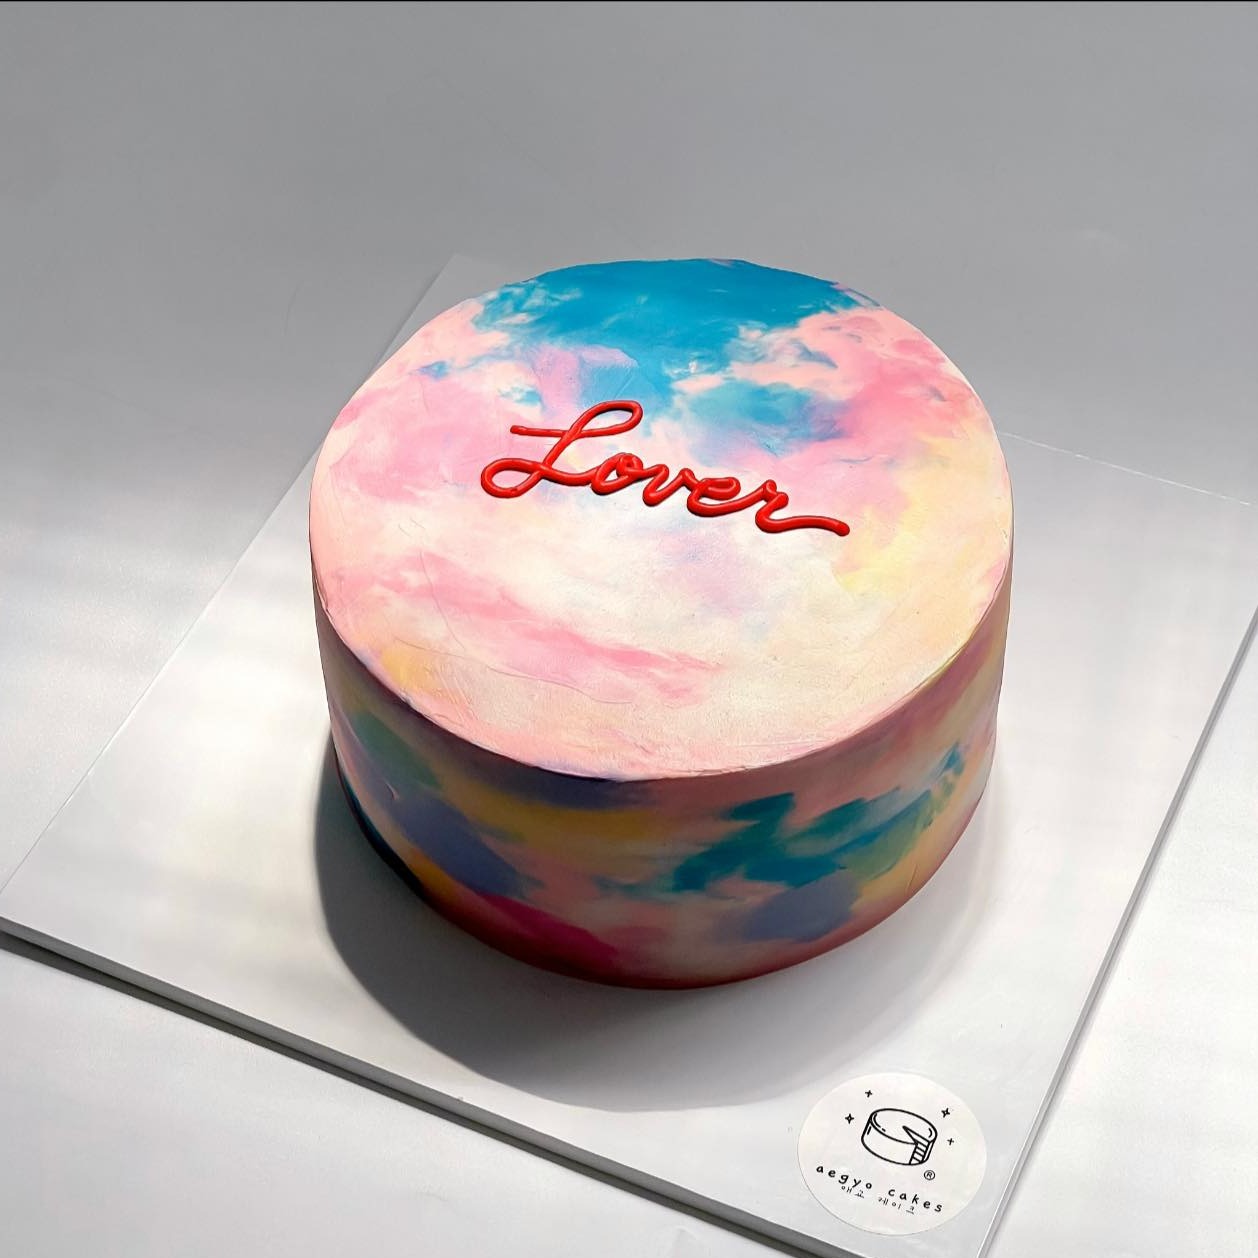 Taylor Swift's Lover Signature Aegyo Cake